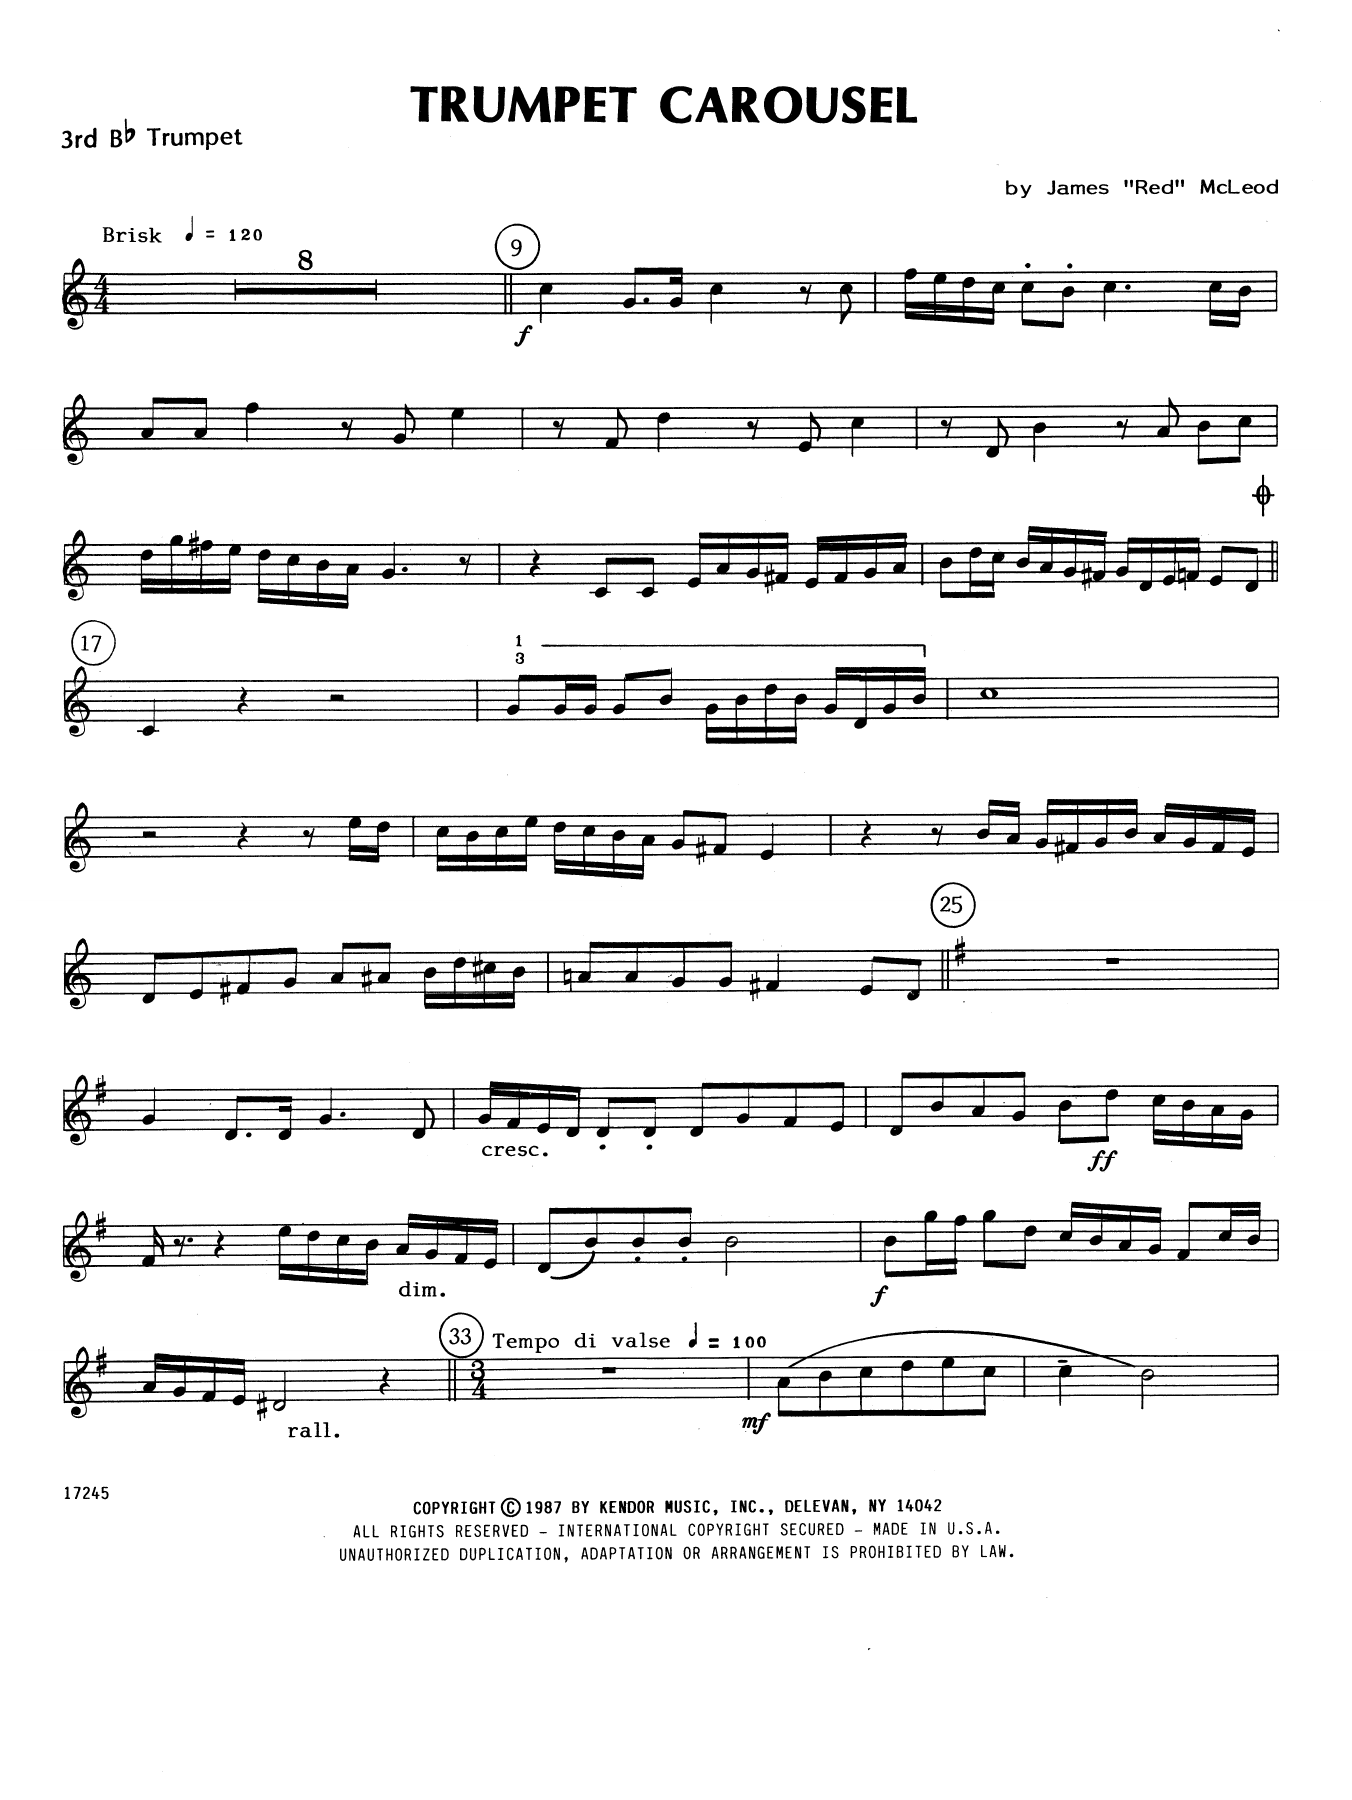 Download James 'Red' McLeod Trumpet Carousel - 3rd Bb Trumpet Sheet Music